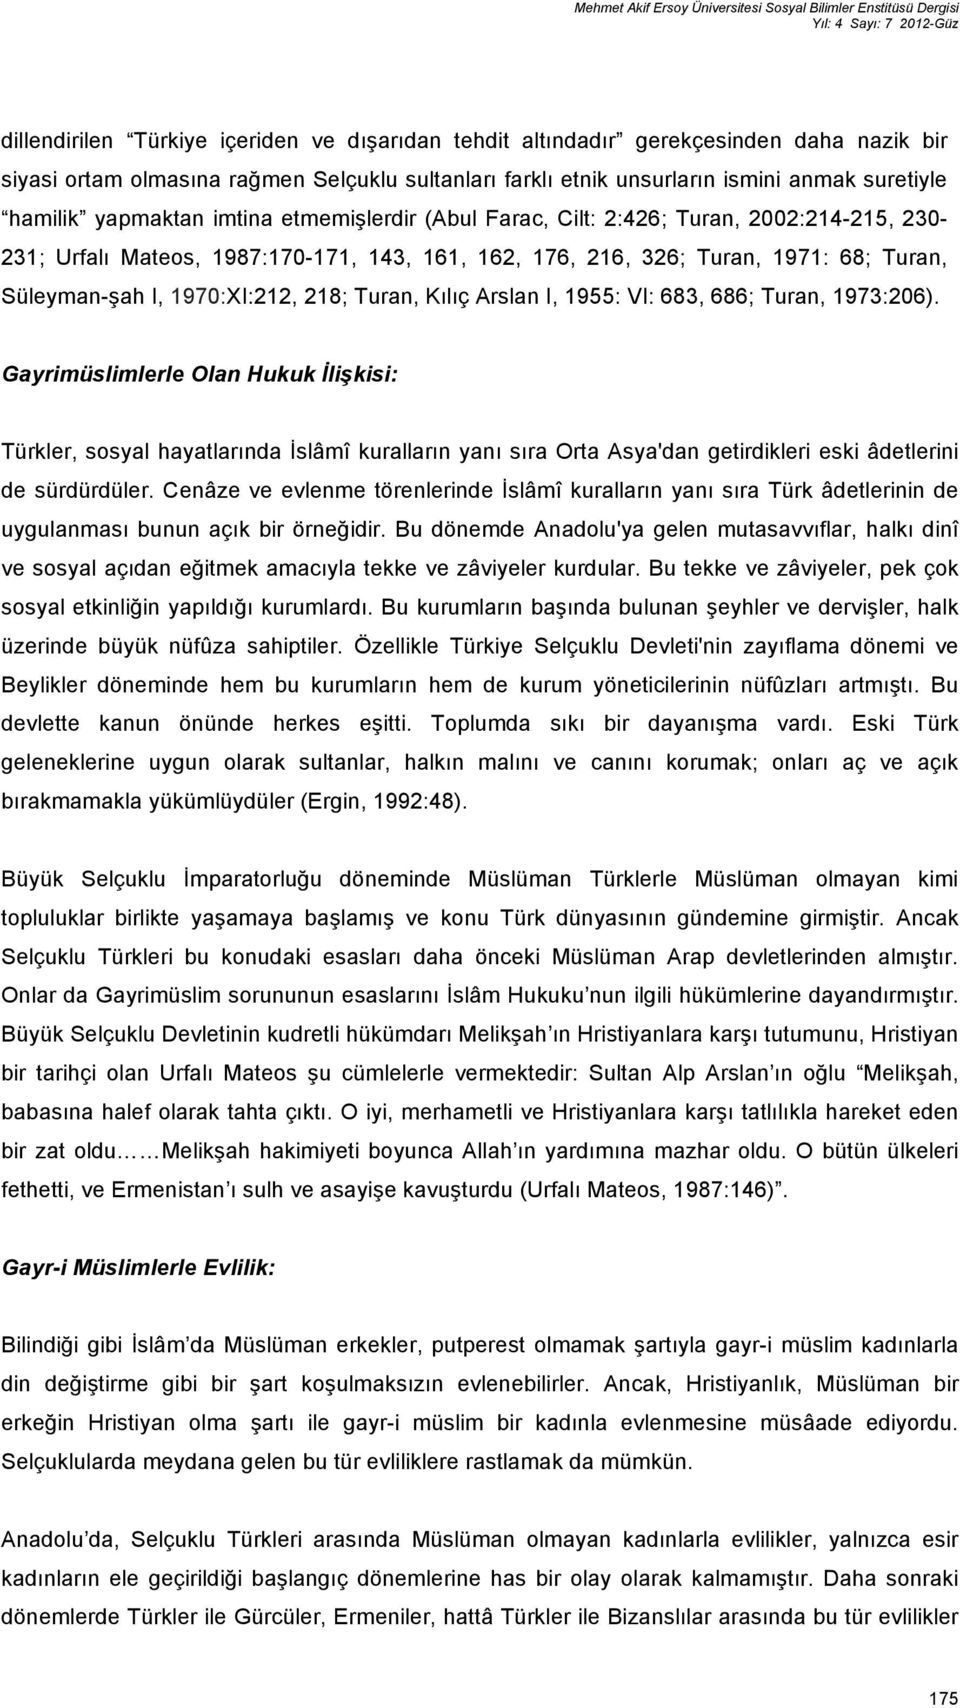 1987:170-171, 143, 161, 162, 176, 216, 326; Turan, 1971: 68; Turan, Süleyman-şah I, 1970:XI:212, 218; Turan, Kılıç Arslan I, 1955: VI: 683, 686; Turan, 1973:206).